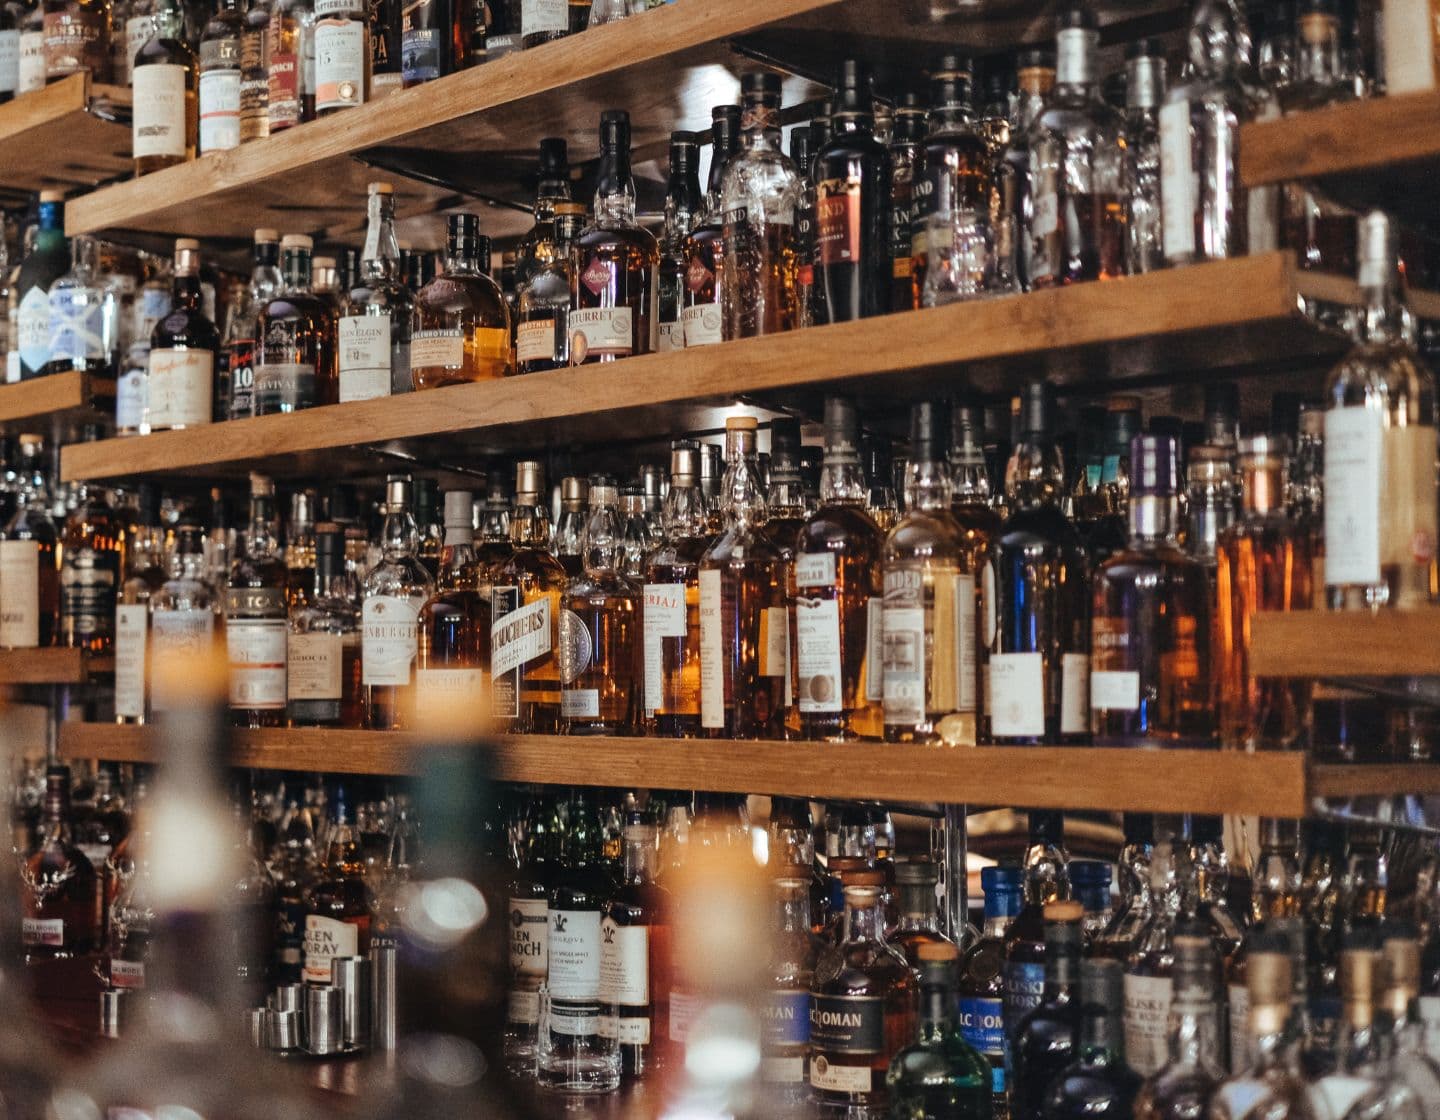 Multiple shelves filled with whisky bottles 